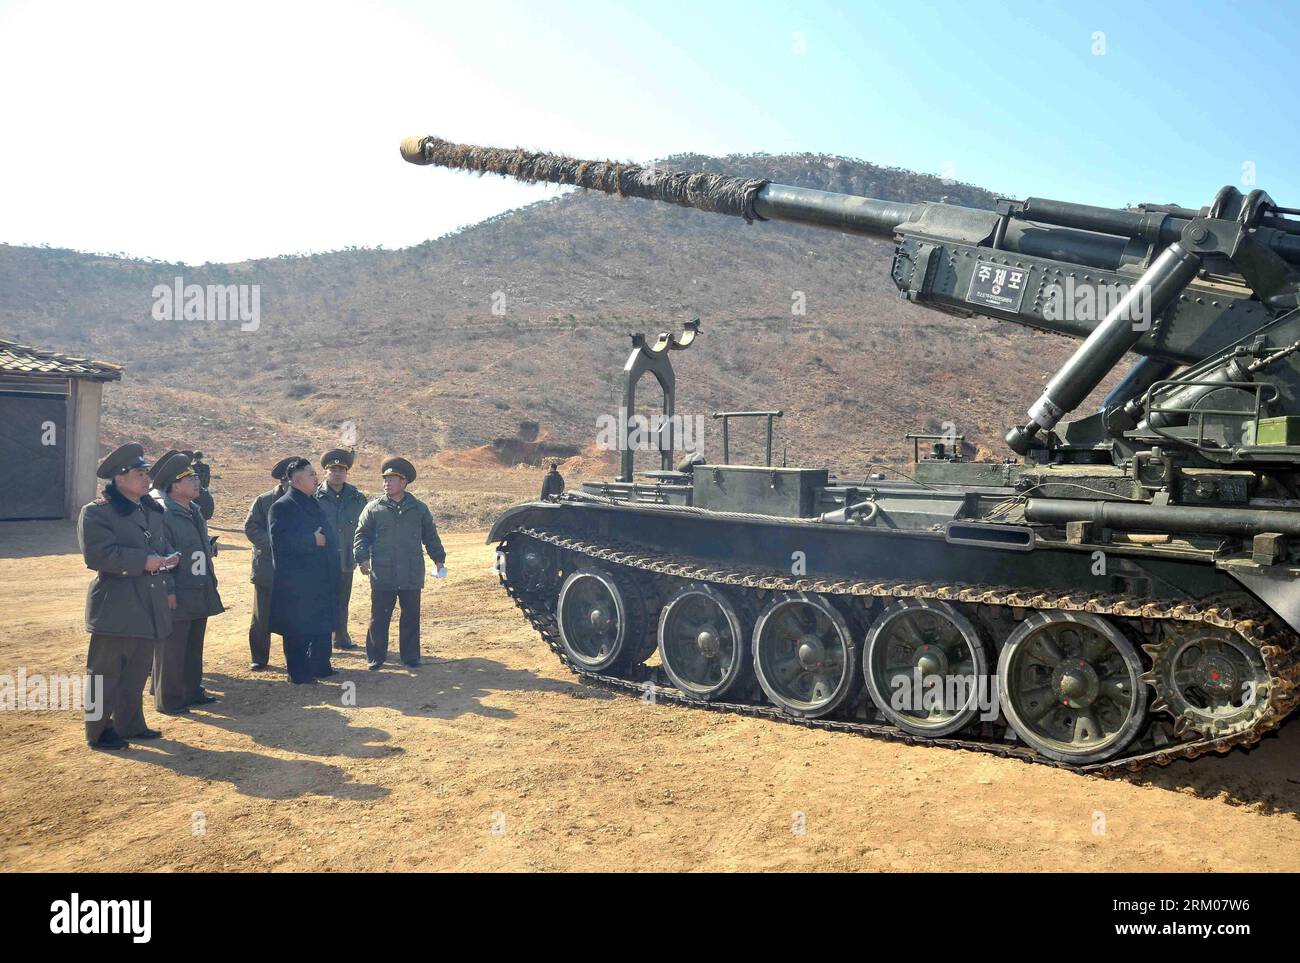 Bildnummer: 59341374  Datum: 12.03.2013  Copyright: imago/Xinhua (130312) -- PYONGYANG, March 12, 2013 (Xinhua) -- Photo released by KCNA news agency on March 12, 2013 shows Kim Jong Un (3rd R), top leader of the Democratic People s Republic of Korea (DPRK), inspecting a long-range artillery sub-unit of Korean People s Army Unit 641, March 11, 2013. (Xinhua/KCNA) (zw) DPRK-MILITARY-KIM JONG UN PUBLICATIONxNOTxINxCHN Politik People Panzer Militär Artillerie Armee x0x xdd Korea Nordkorea premiumd 2013 quer Aufmacher      59341374 Date 12 03 2013 Copyright Imago XINHUA  Pyongyang March 12 2013 XI Stock Photo